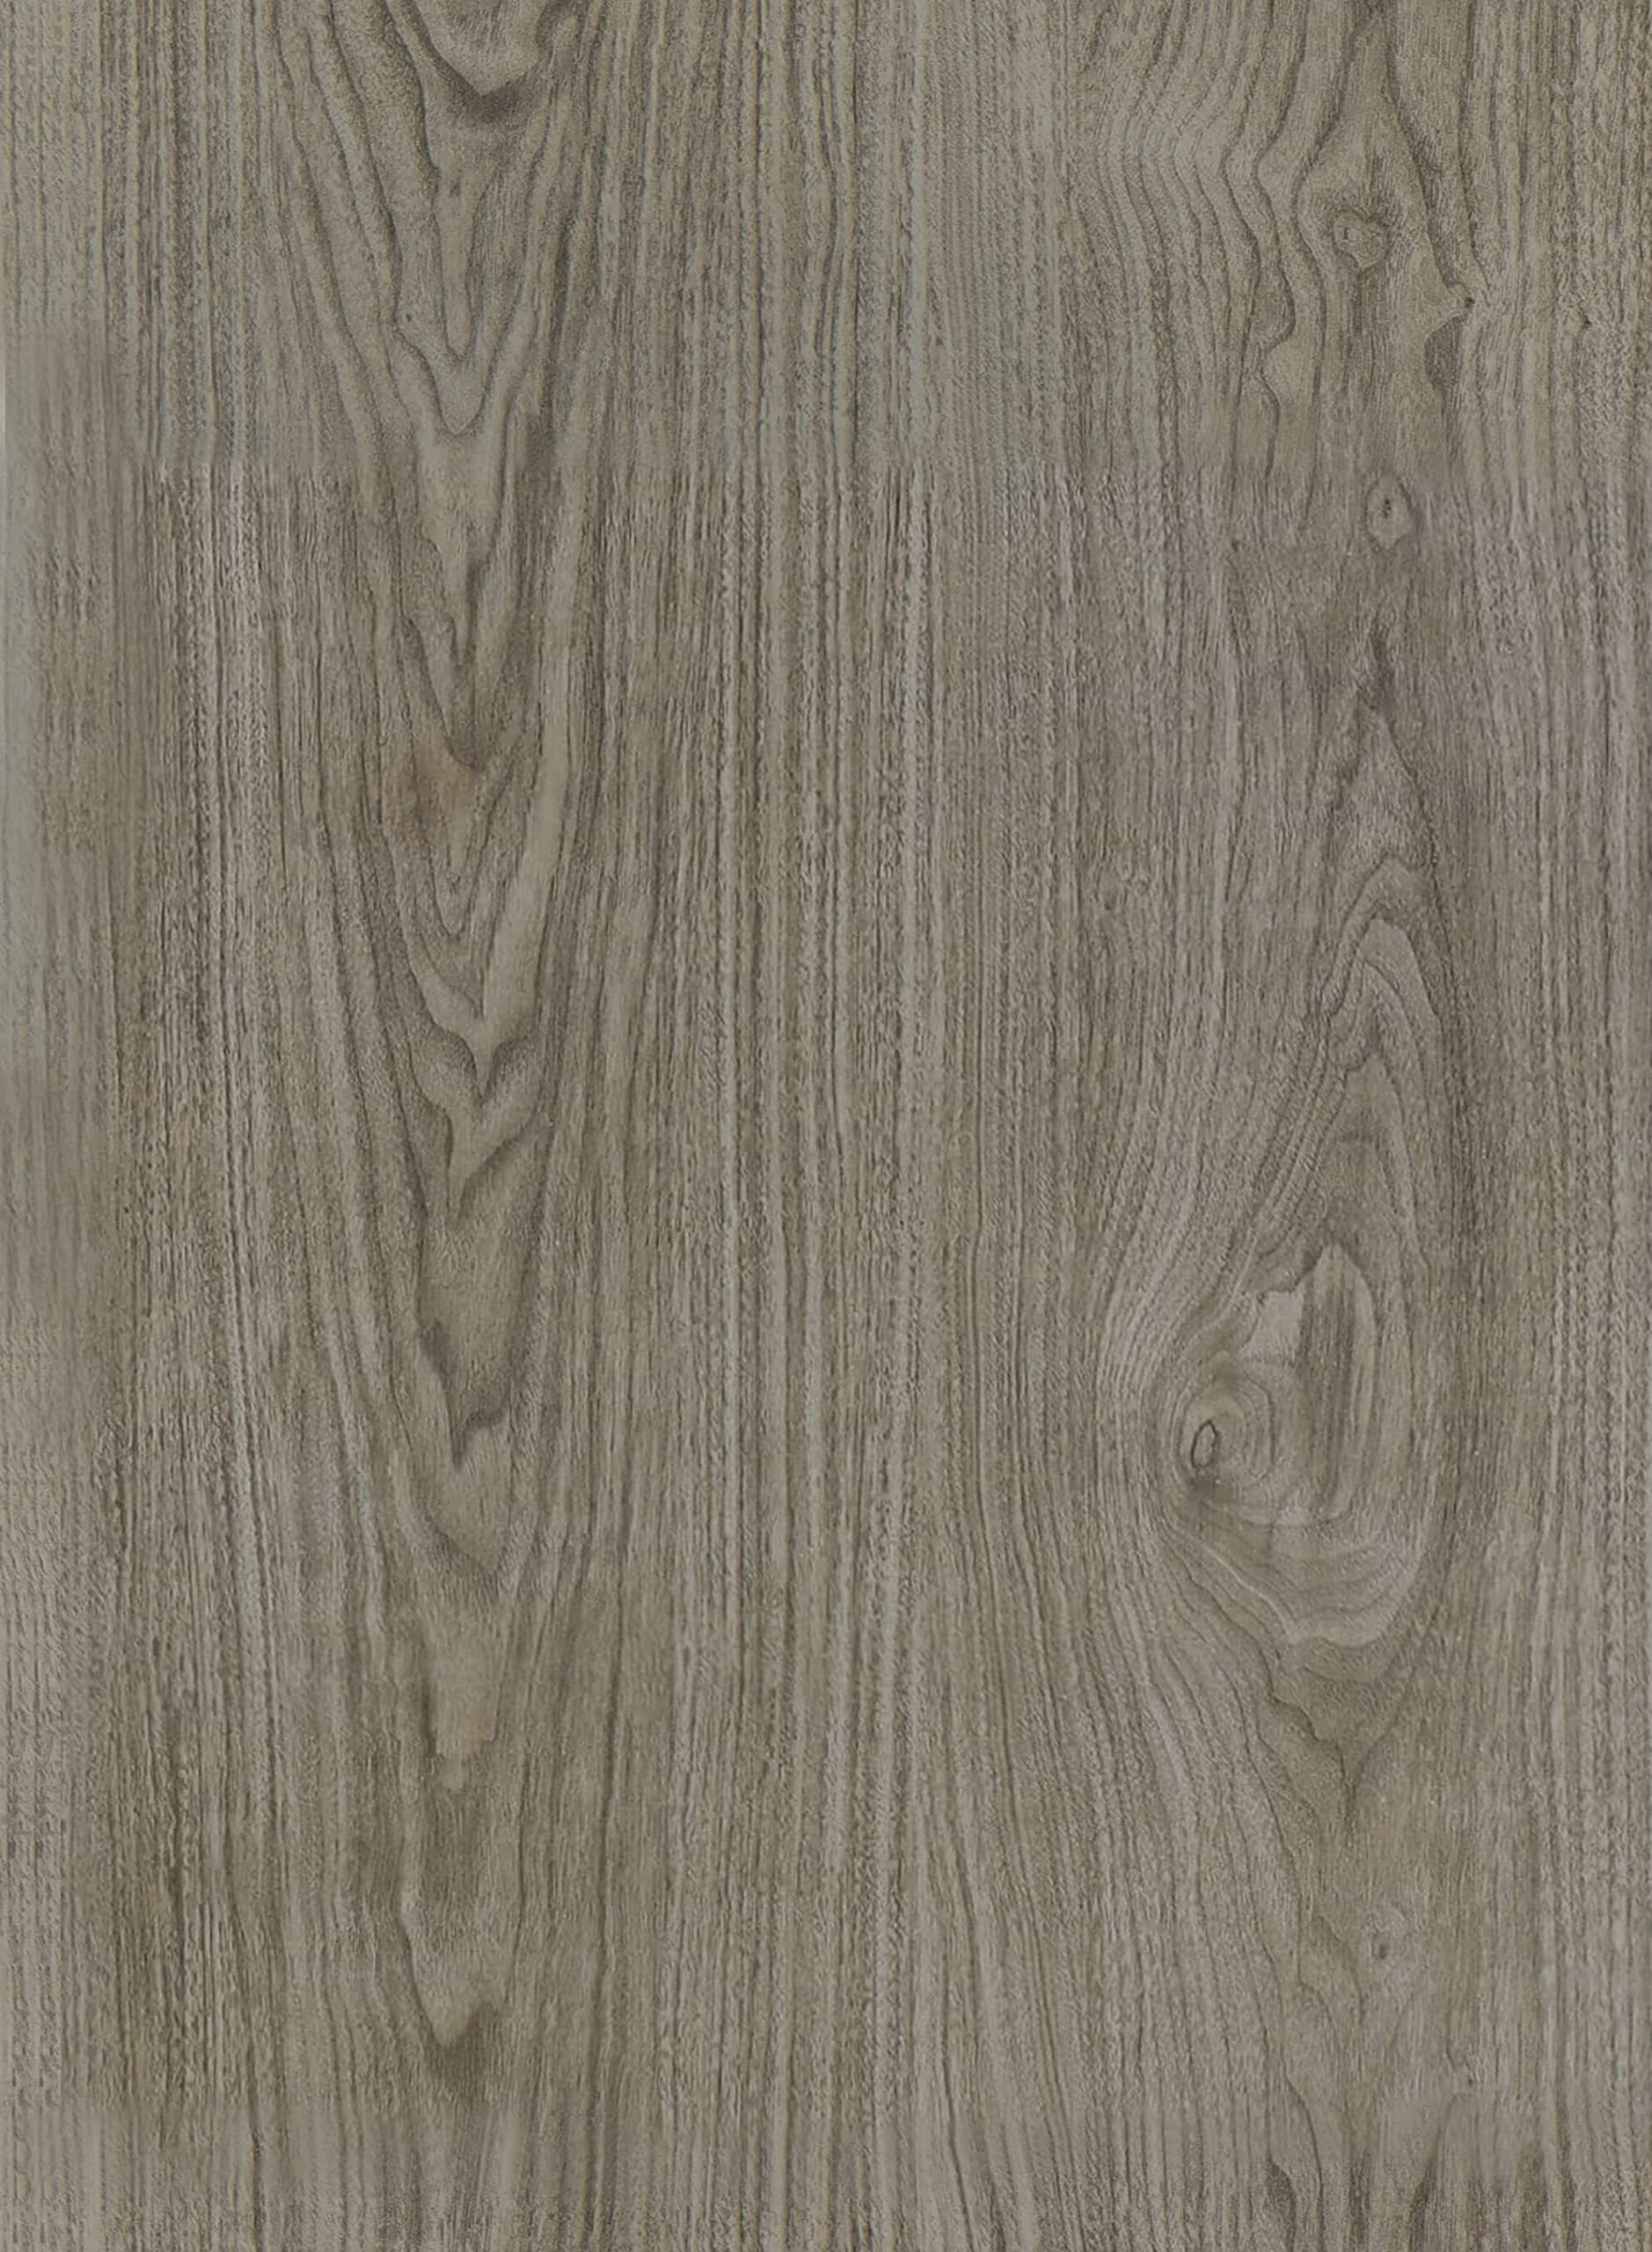 White Wood Grain Wallpapers